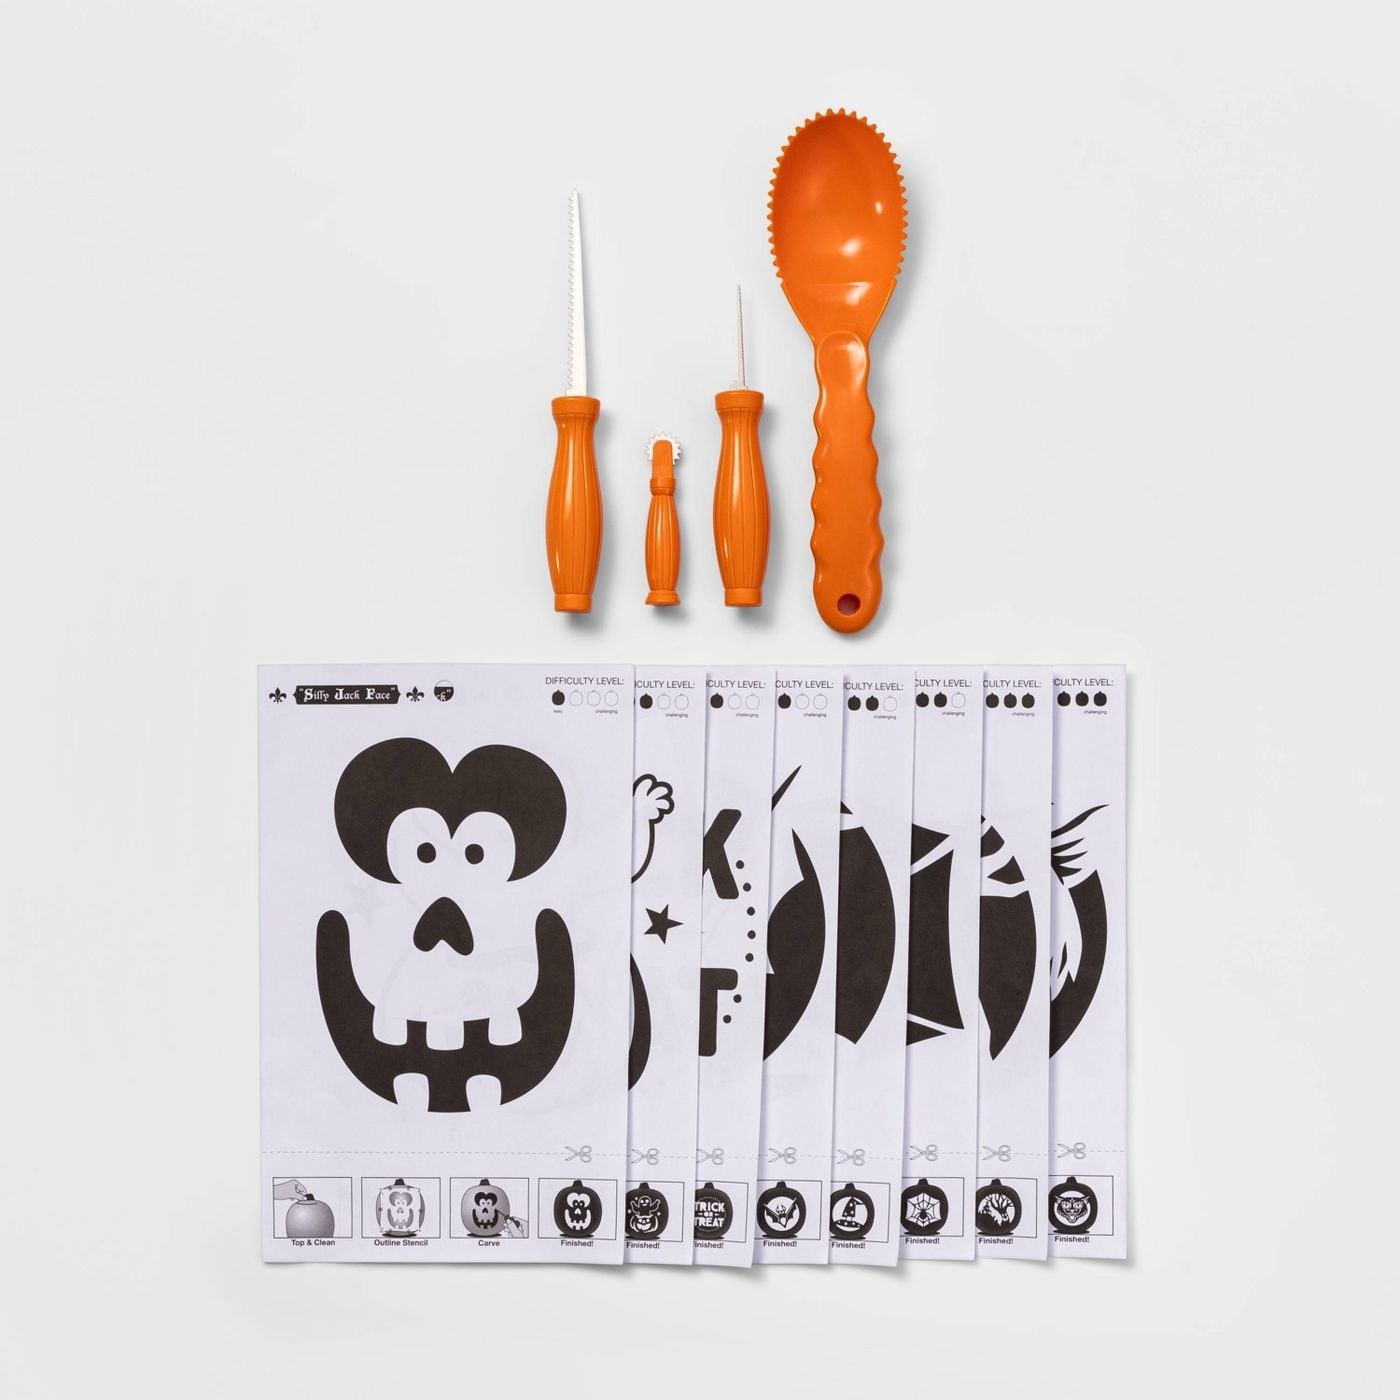 Orange pumpkin carving tools and black and white pumpkin stencils